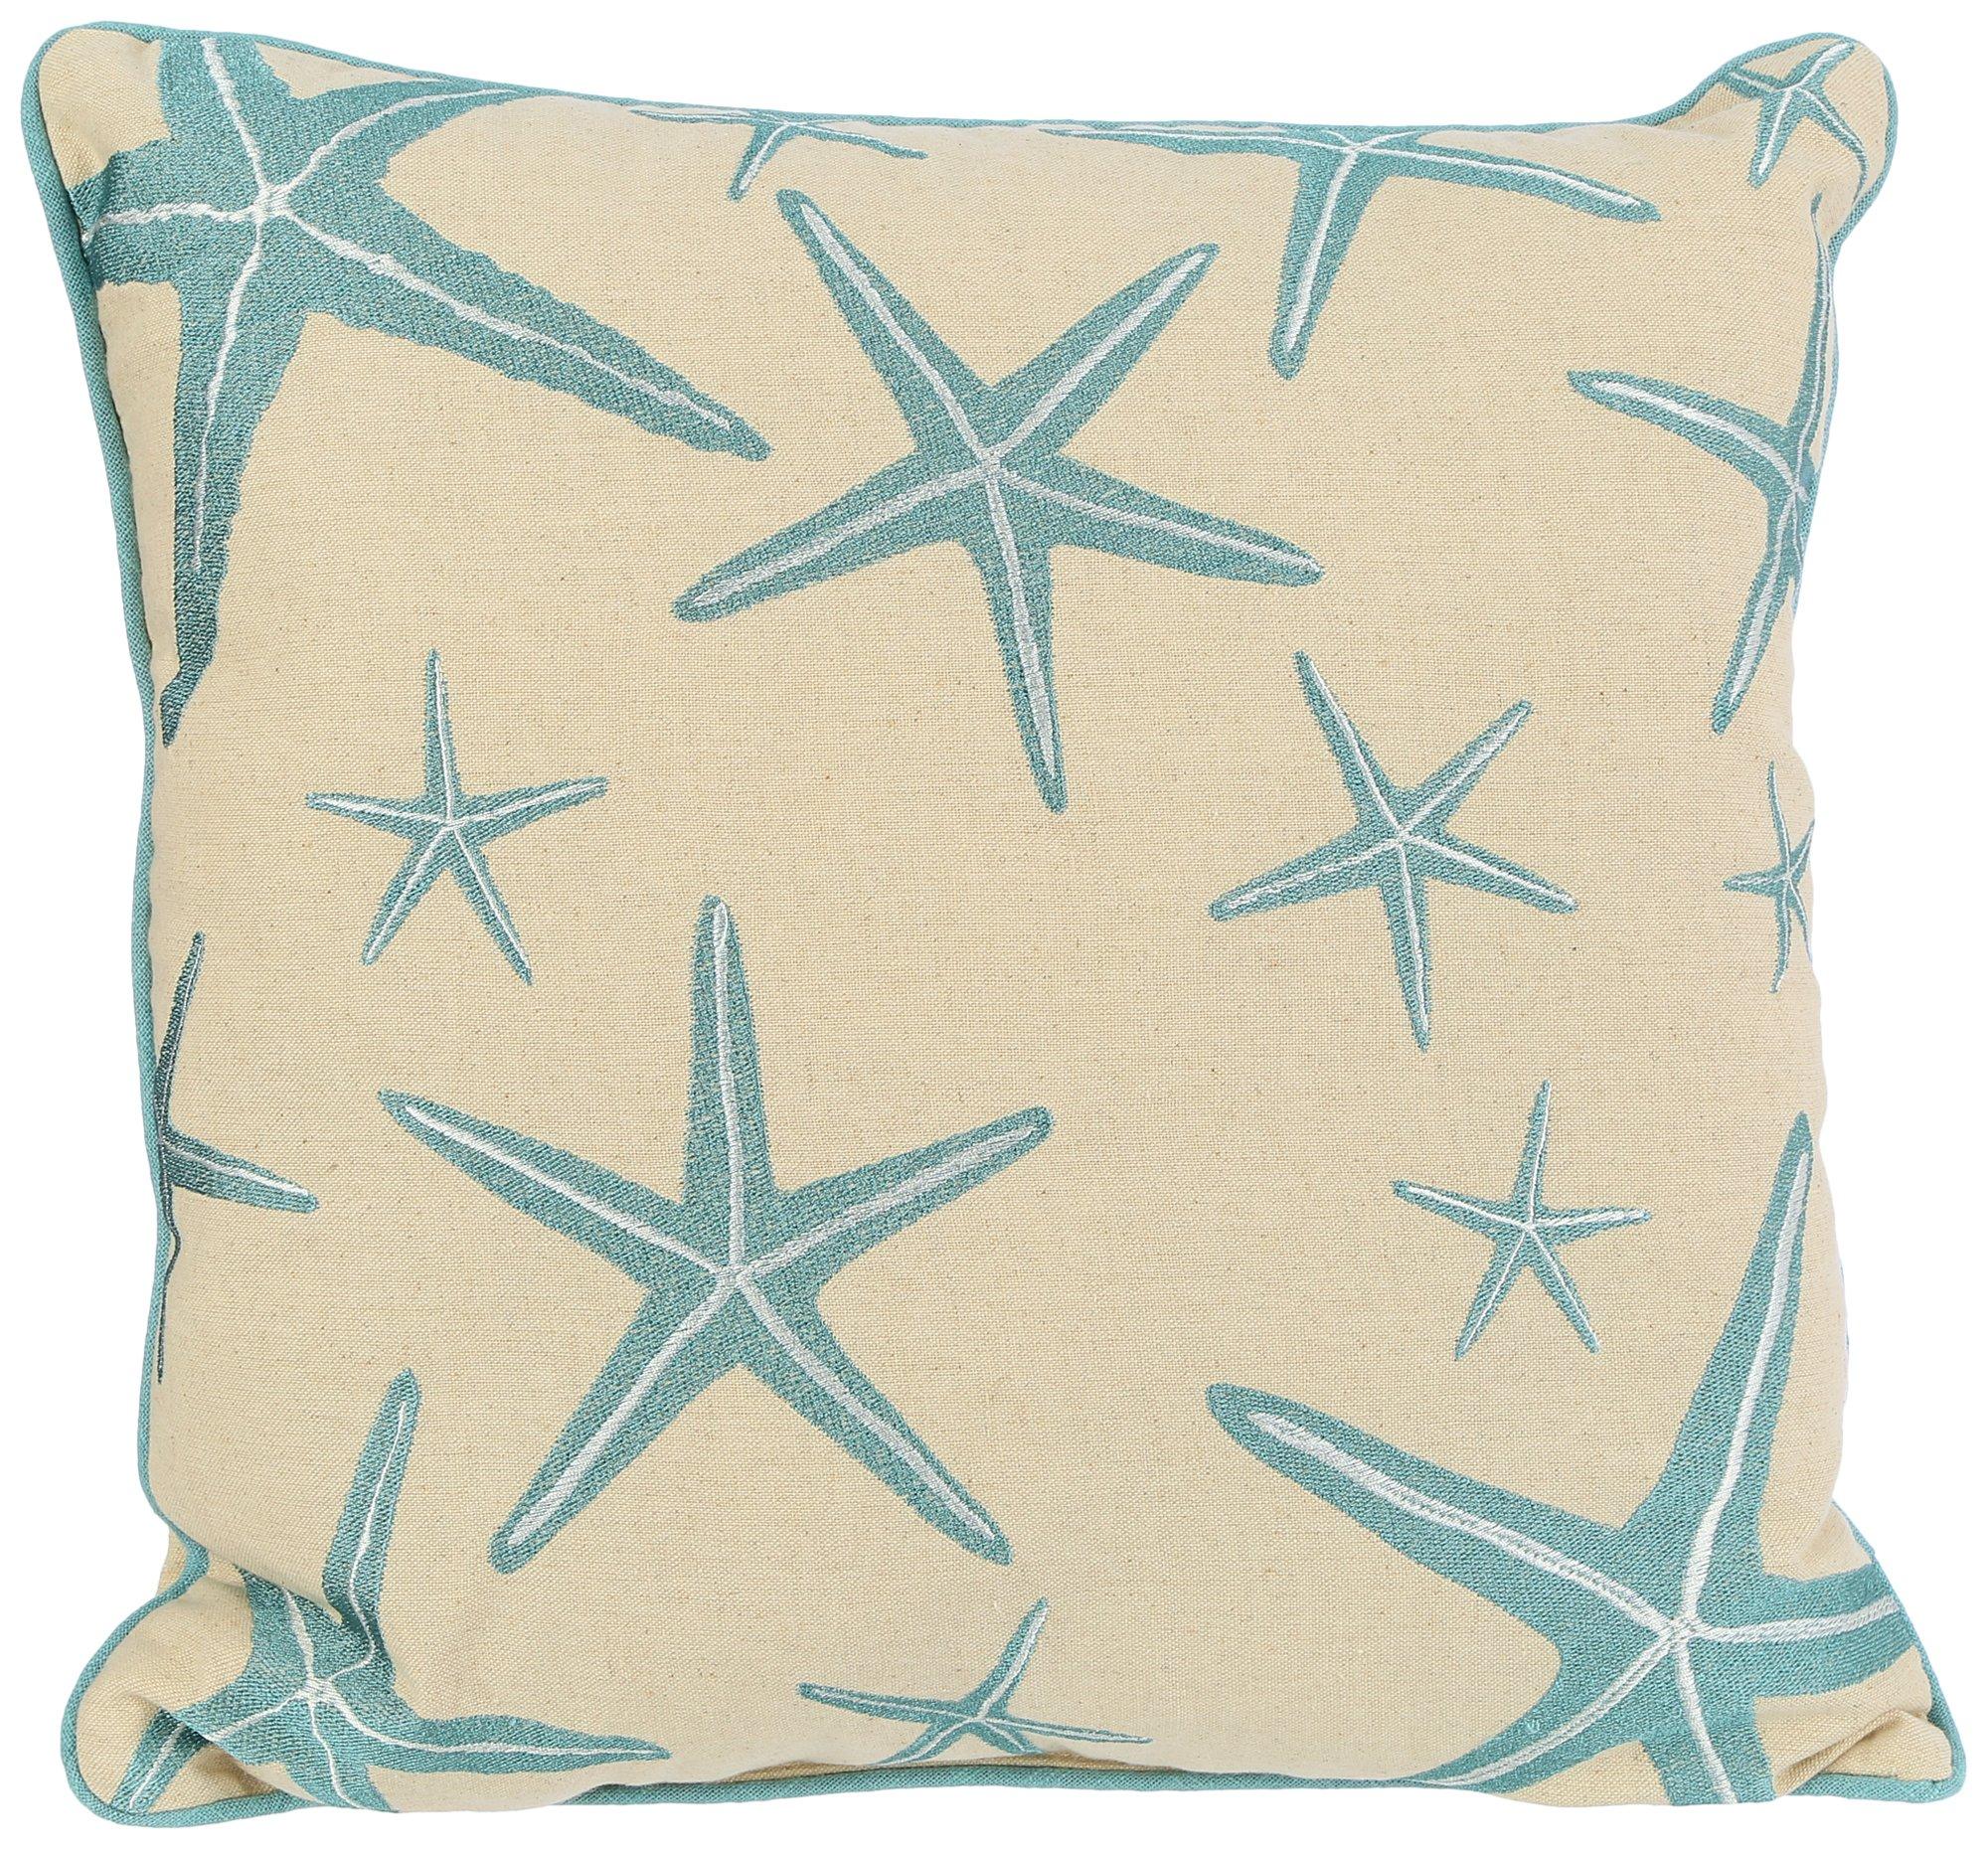 18 x 18 Sea Star Decorative Pillow